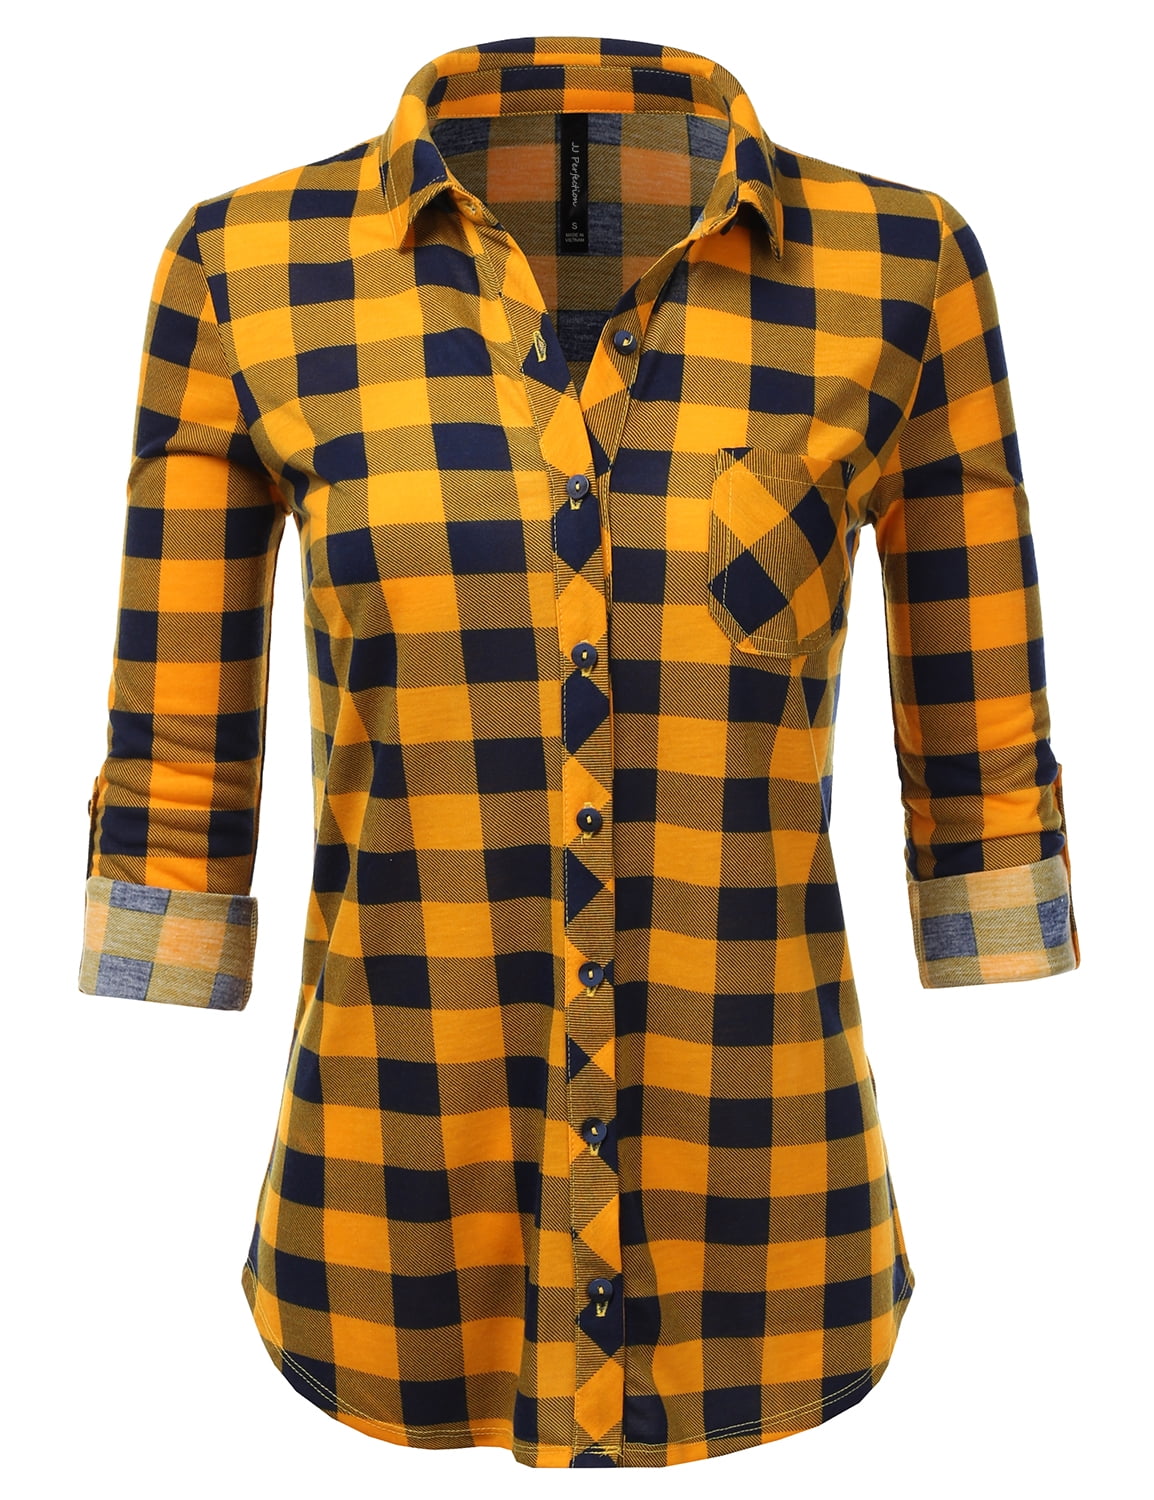 JJ Perfection Women's Long Sleeve Button Down Plaid Flannel Shirt Greenblack 3X